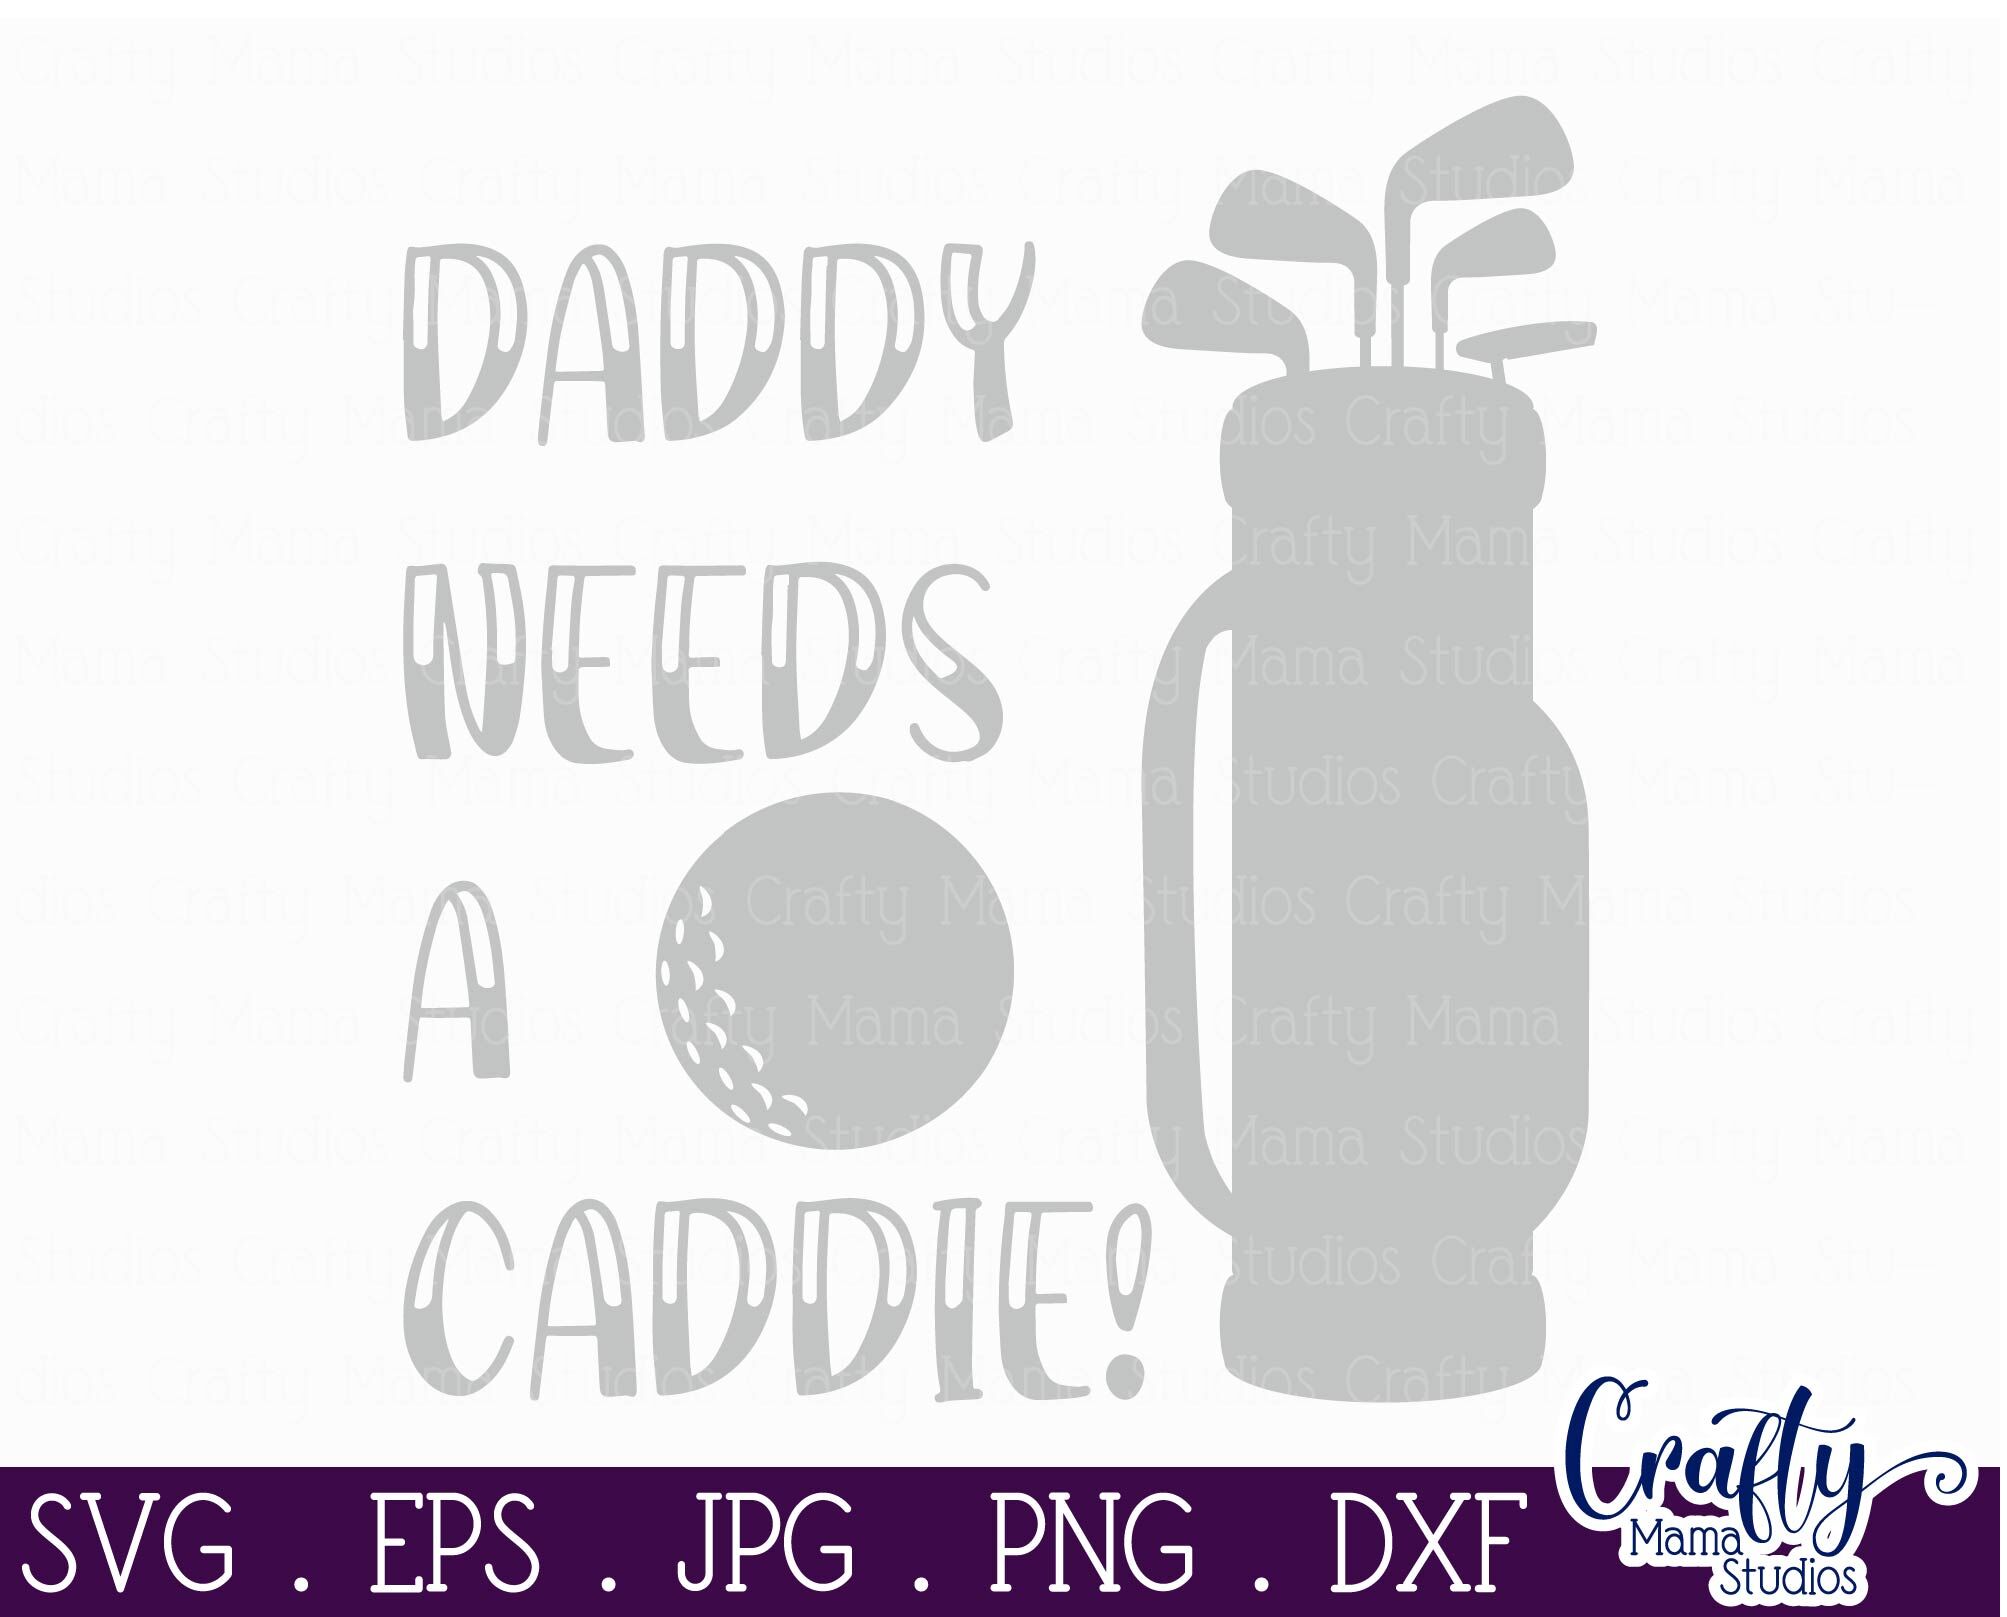 Download Daddy Needs A Caddie Svg Golf Svg Dad Svg By Crafty Mama Studios Thehungryjpeg Com